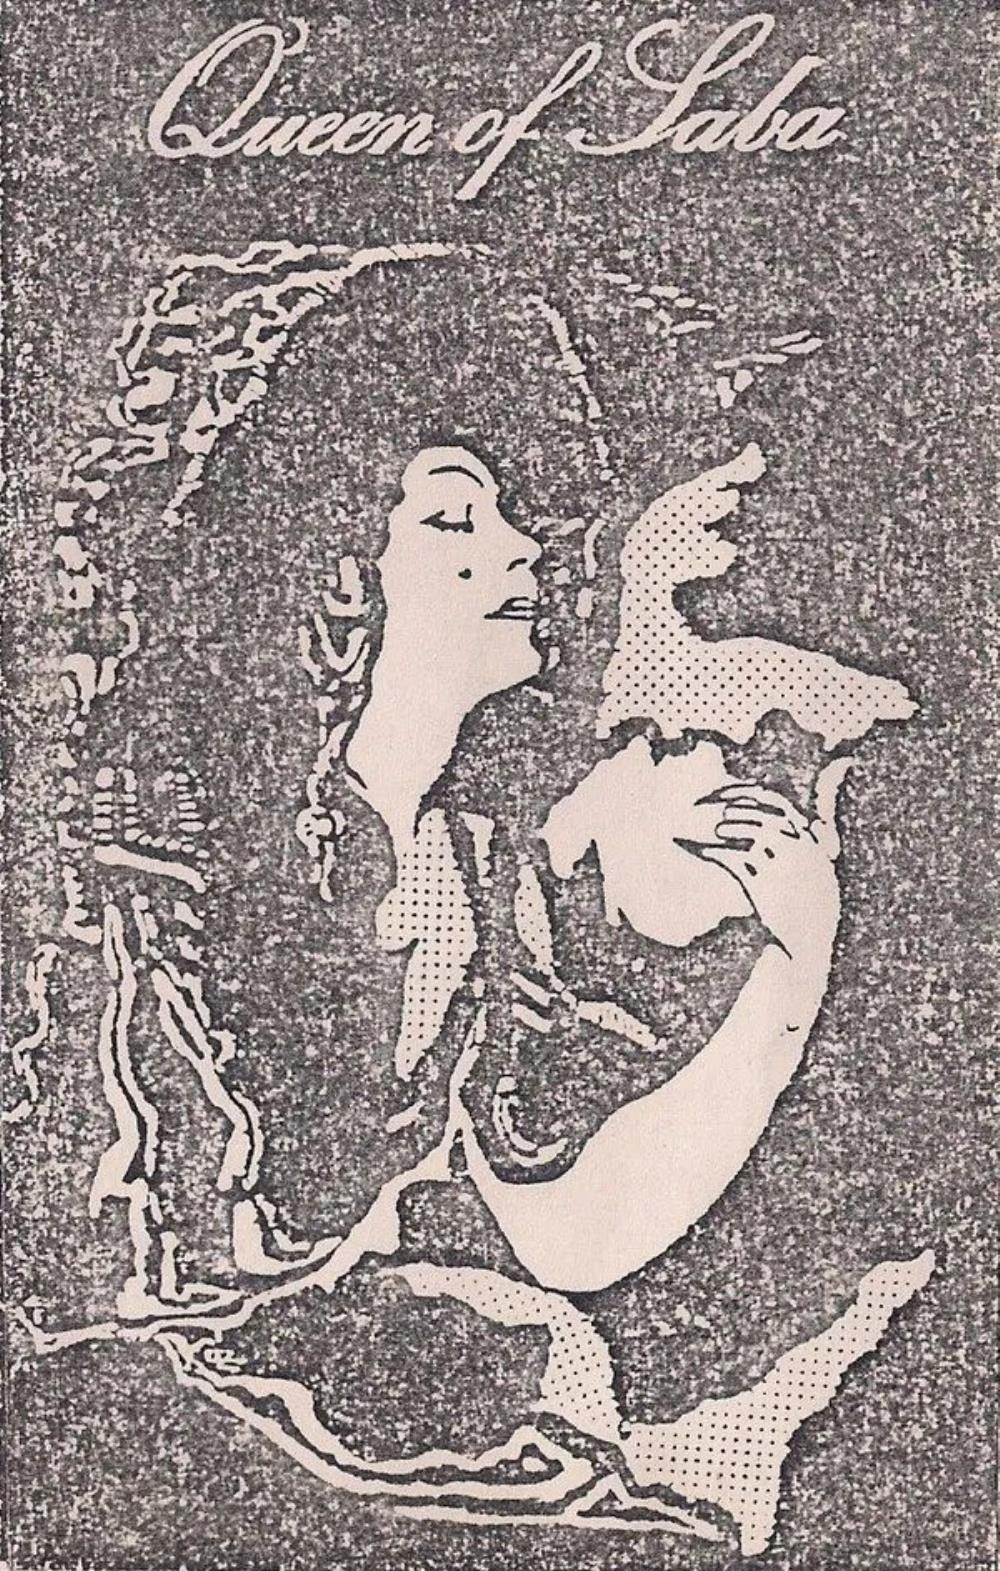 Rdiger Lorenz Queen of Saba album cover